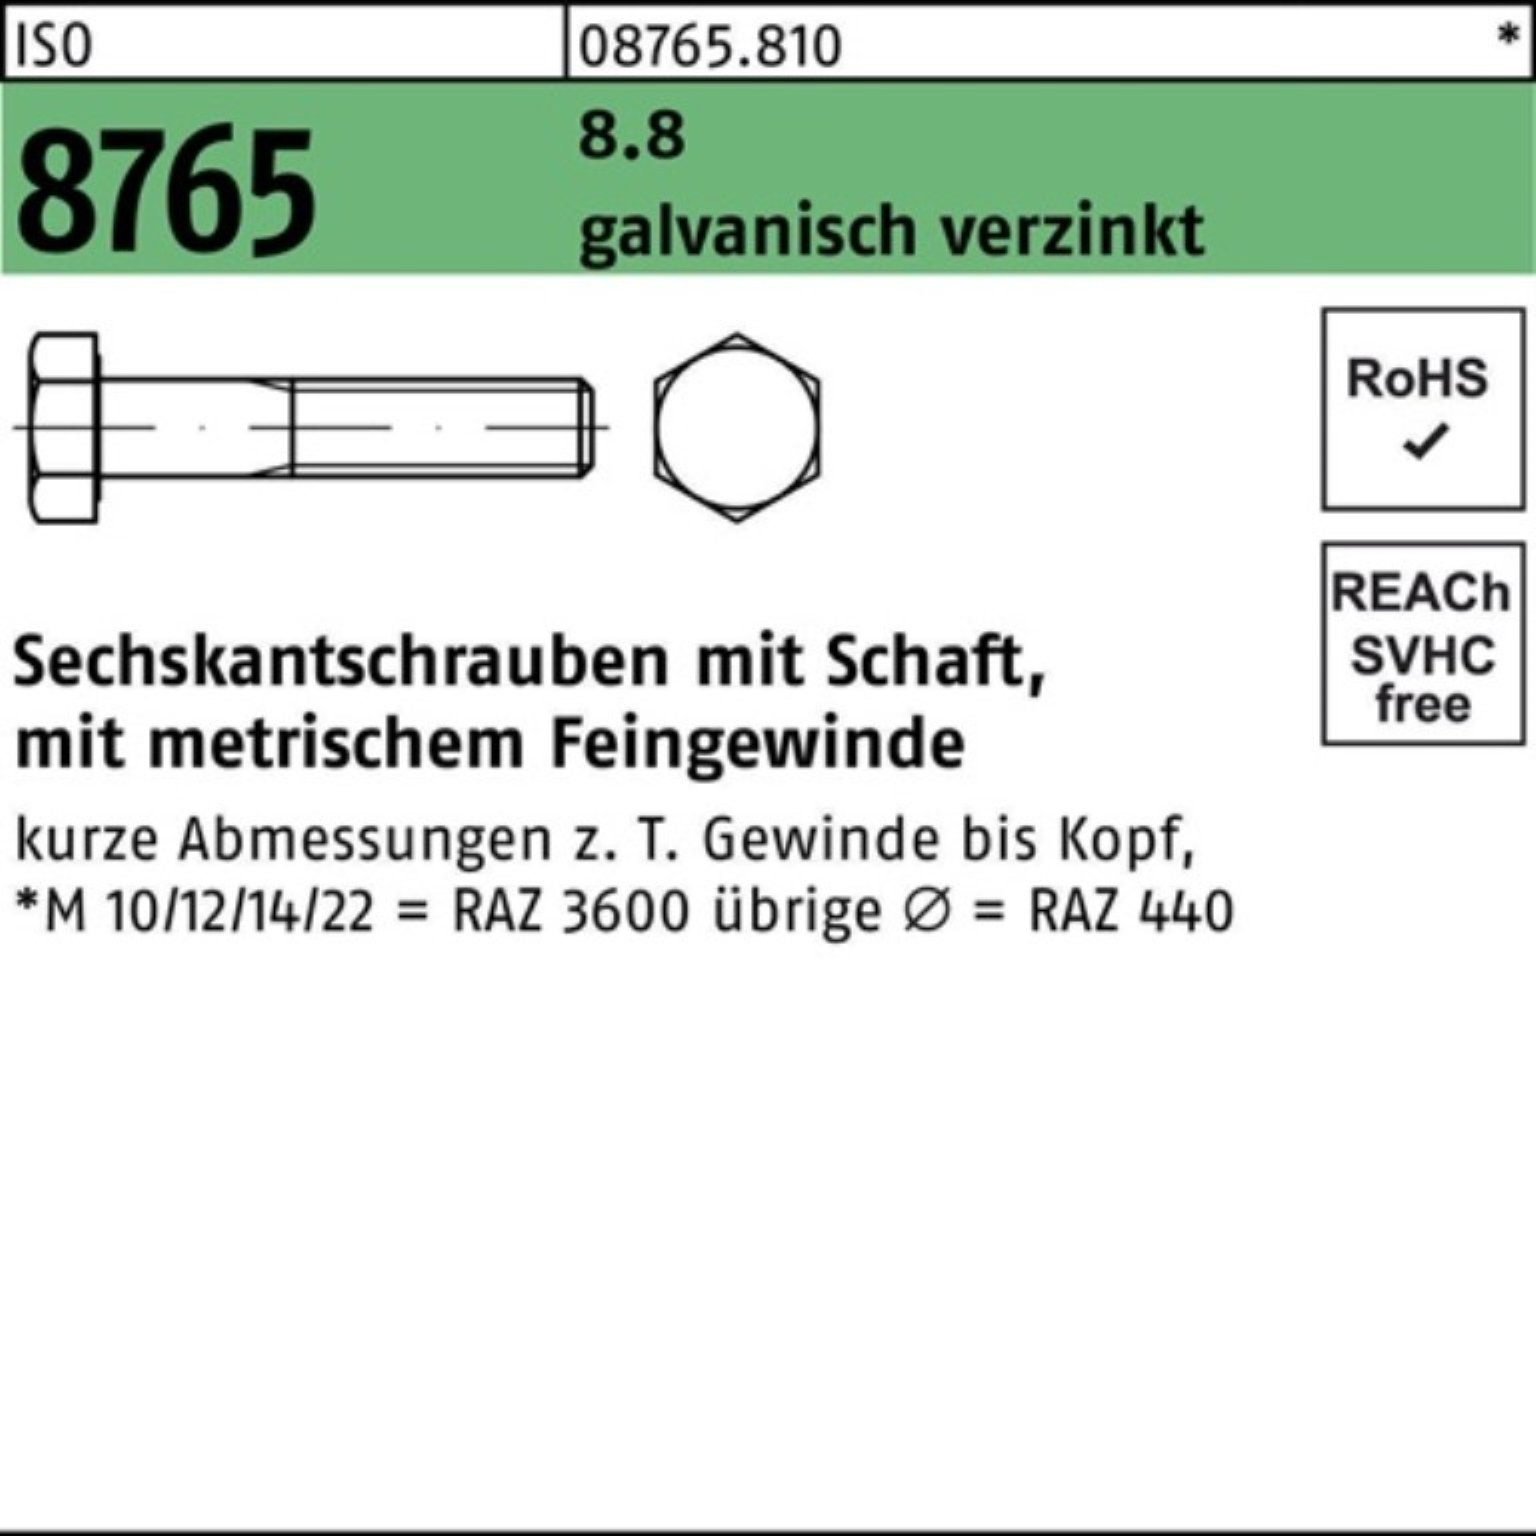 Reyher Sechskantschraube 100er Pack Sechskantschraube 8765 ISO 80 8.8 Schaft galv.verz M16x1,5x